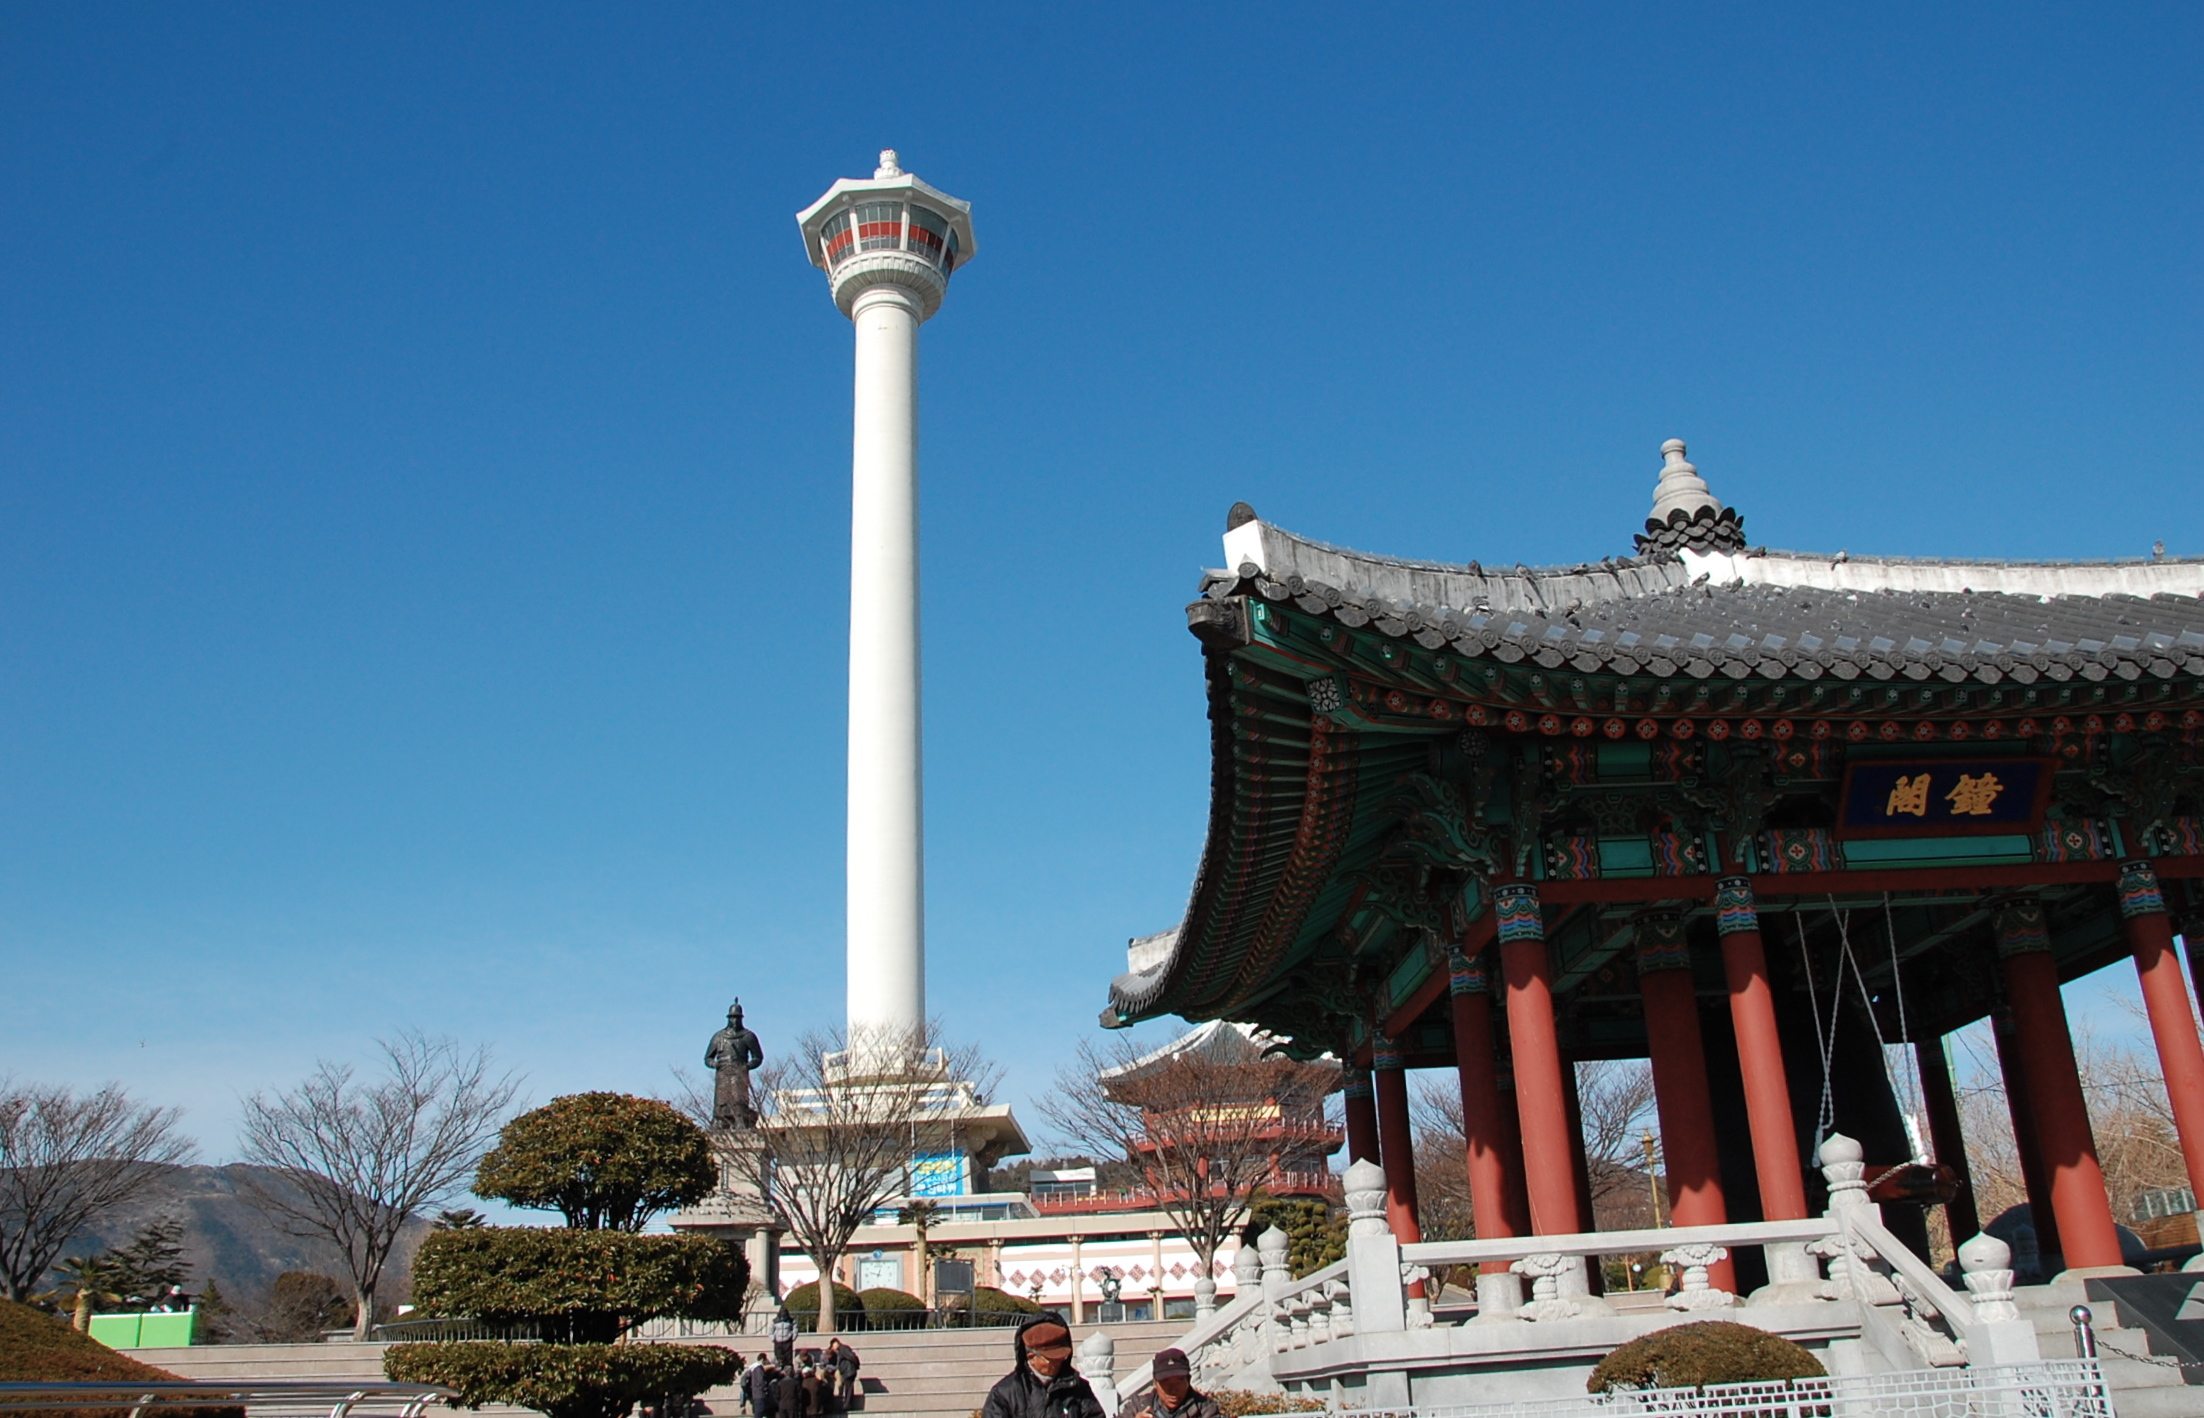 Yongdusan Park and Tower